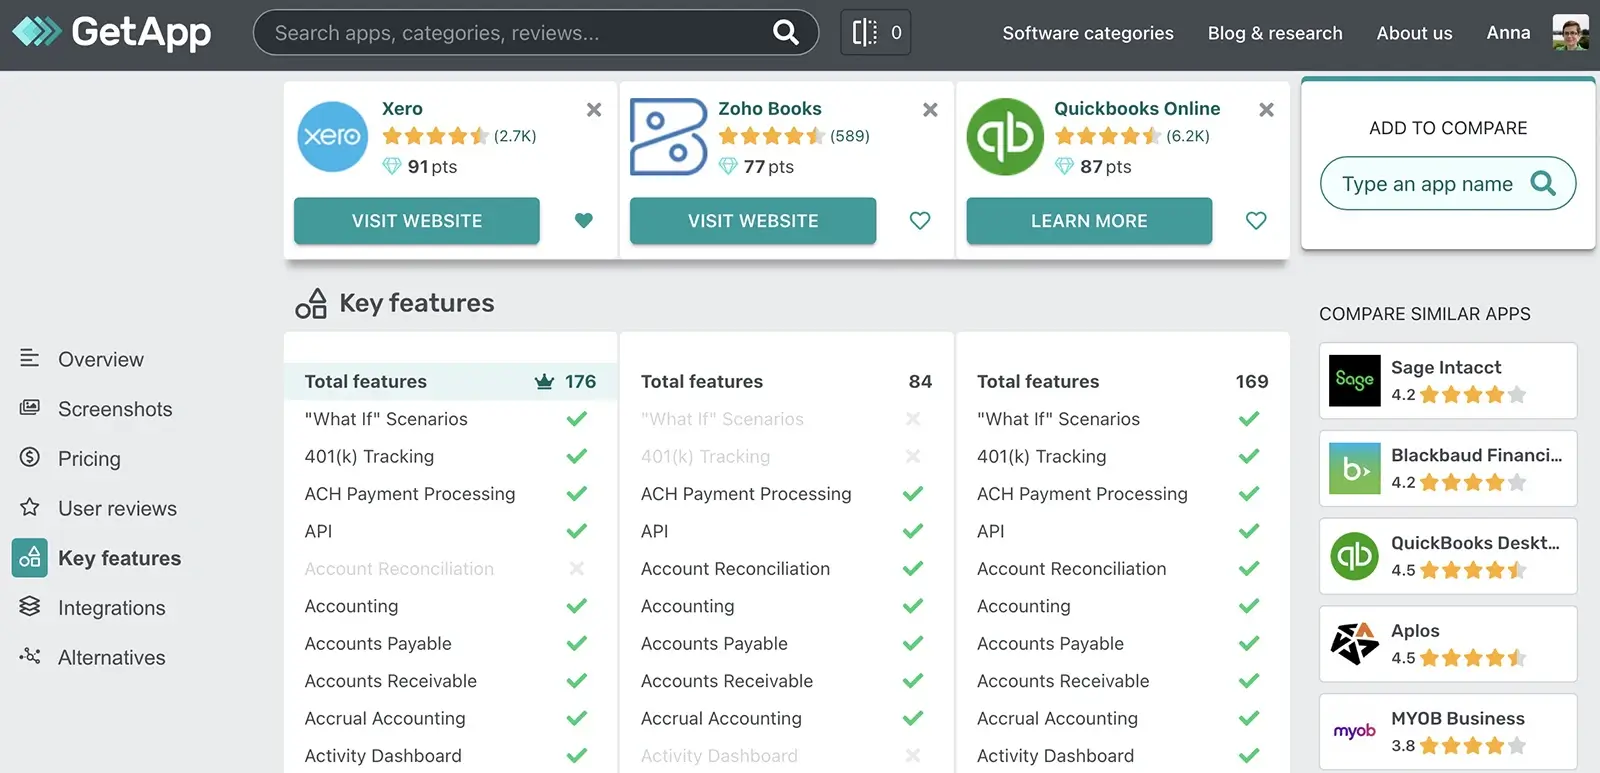 GetApp Overview | How B2B Software Vendors Can Get More Reviews